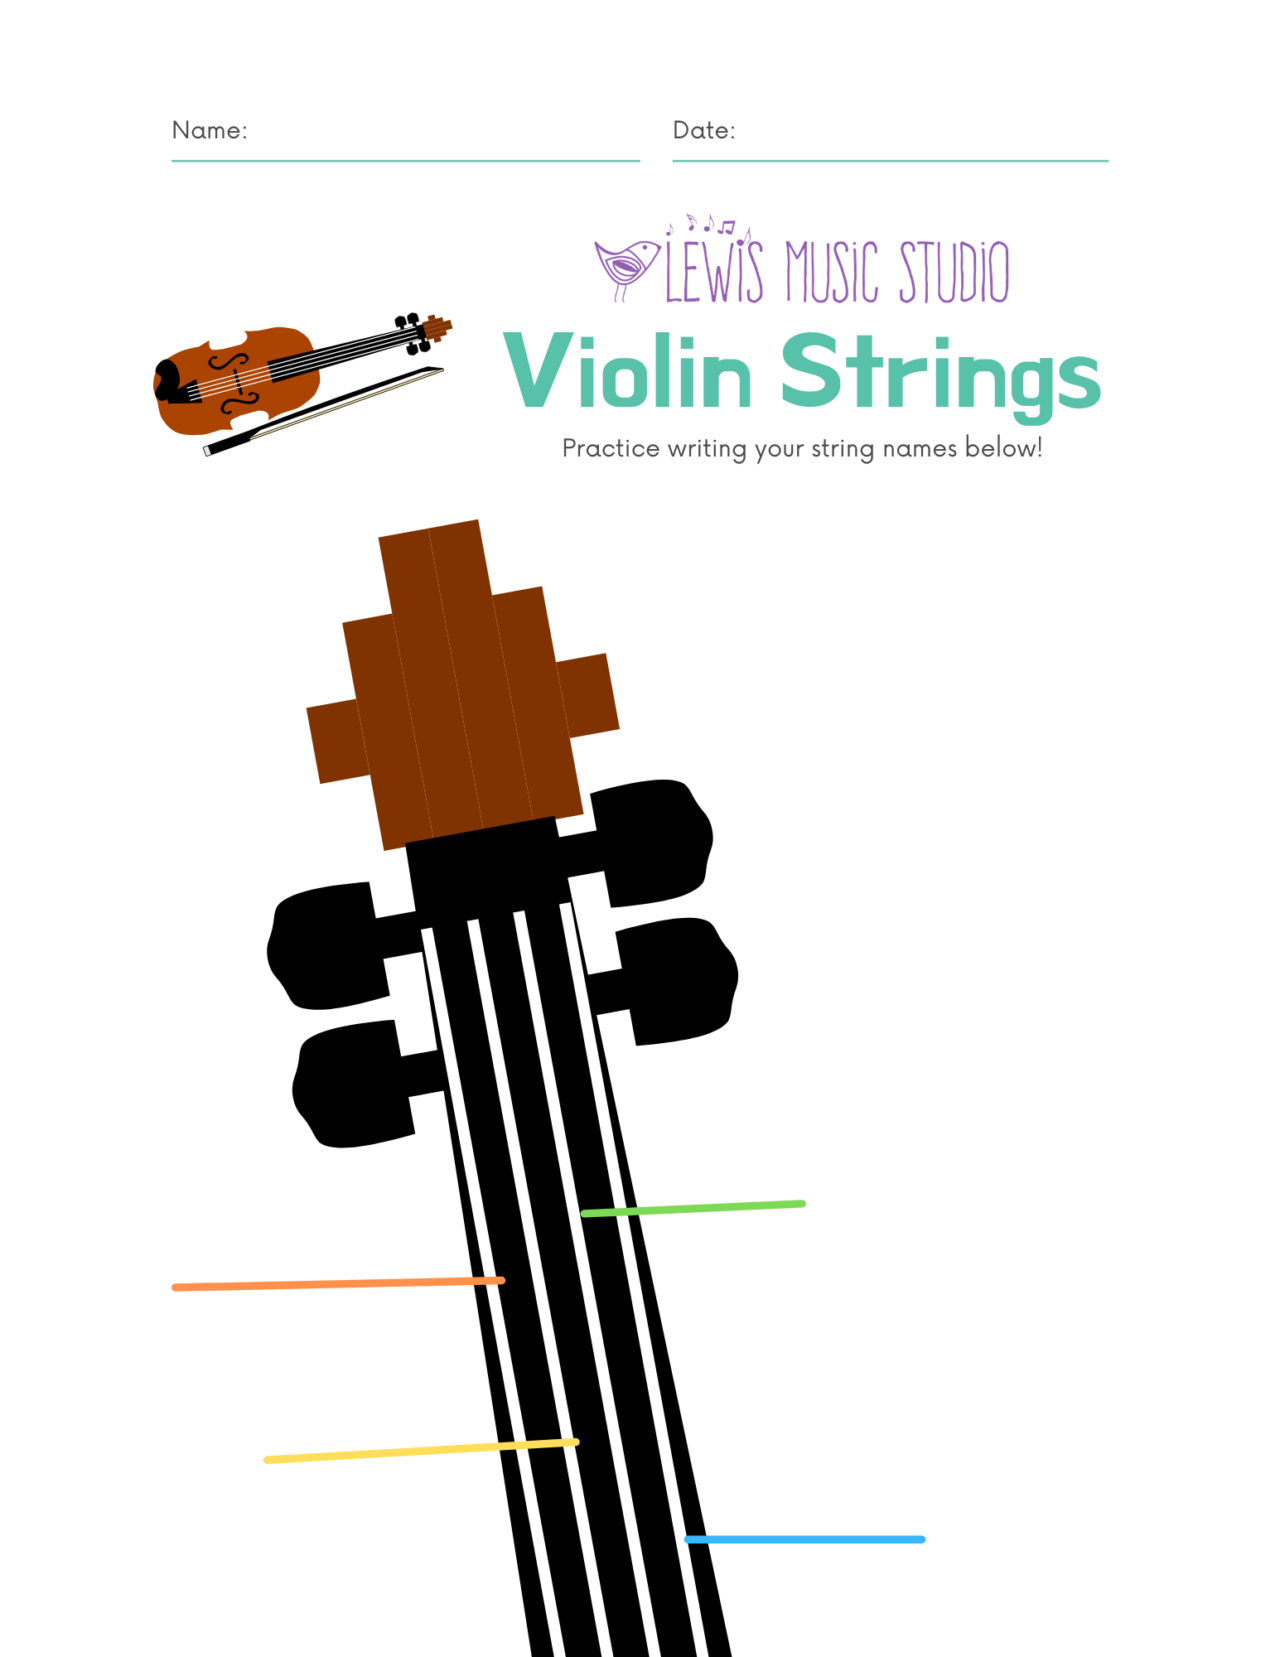 http://lewismusicstudio.net/wp-content/uploads/2021/03/Violin-Strings-1280x1657.png